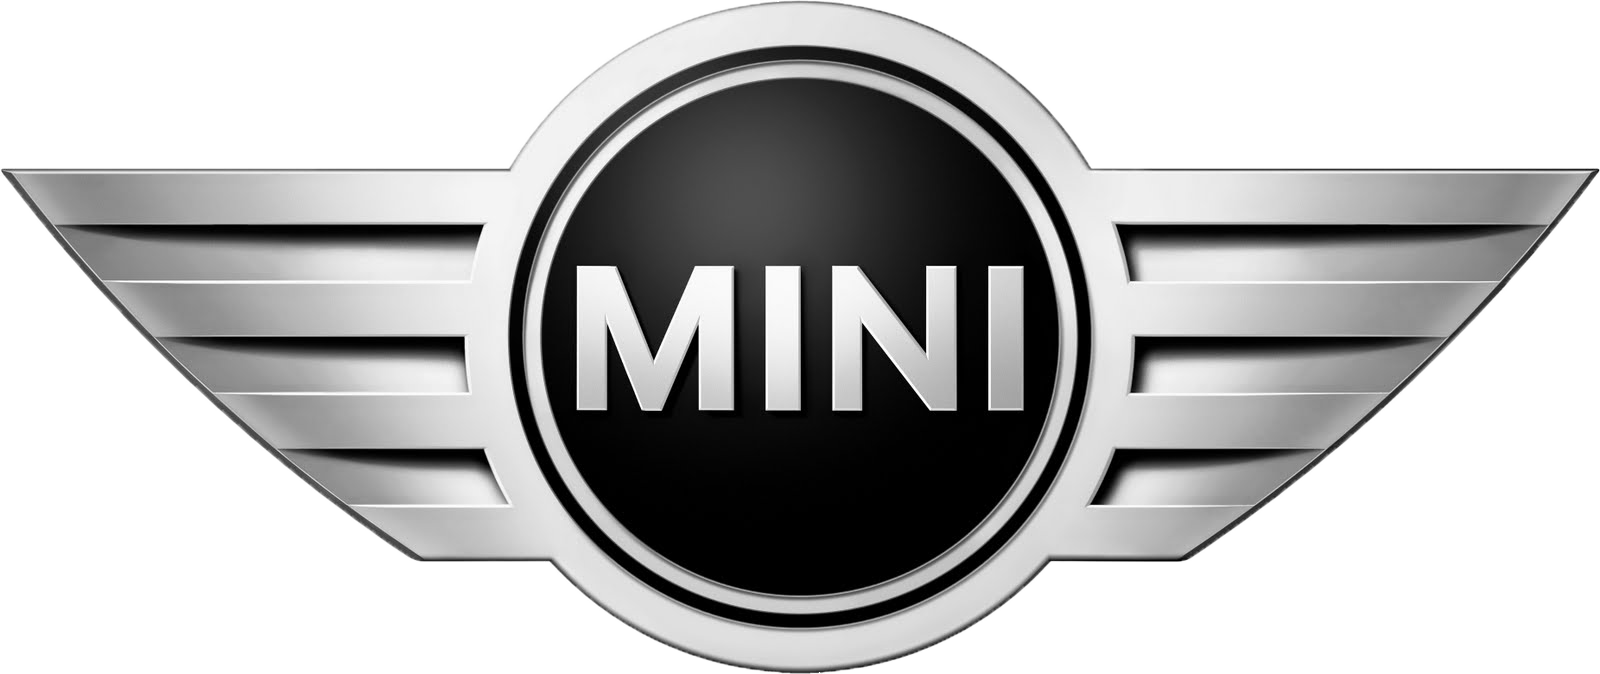 logo of mini